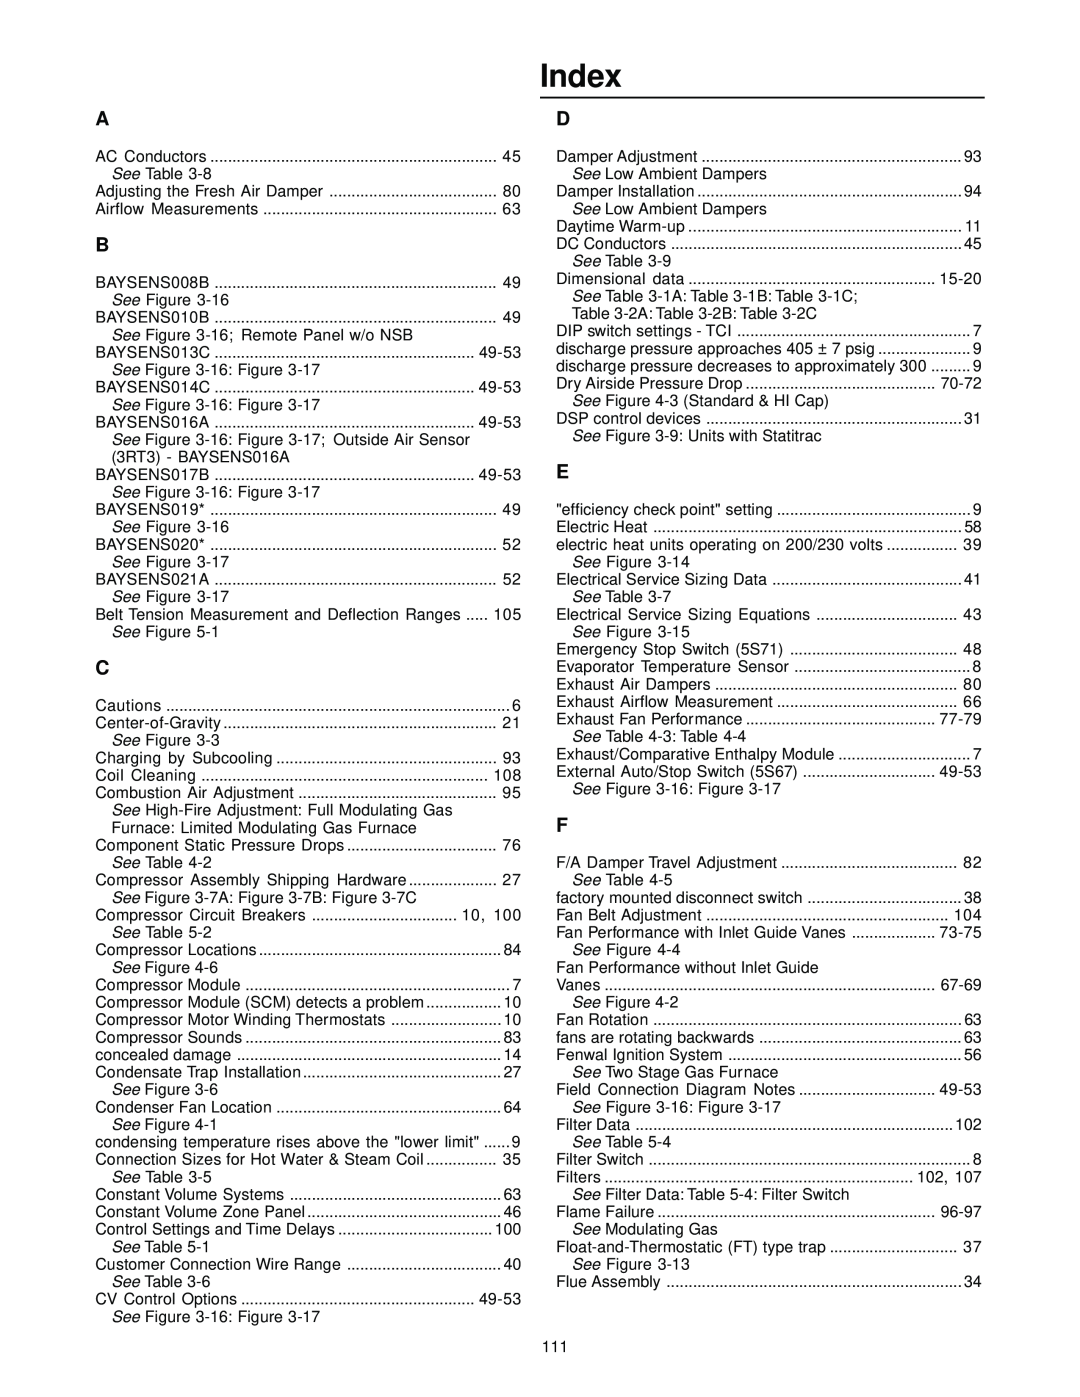 Trane RT-SVX10C-EN specifications Index 